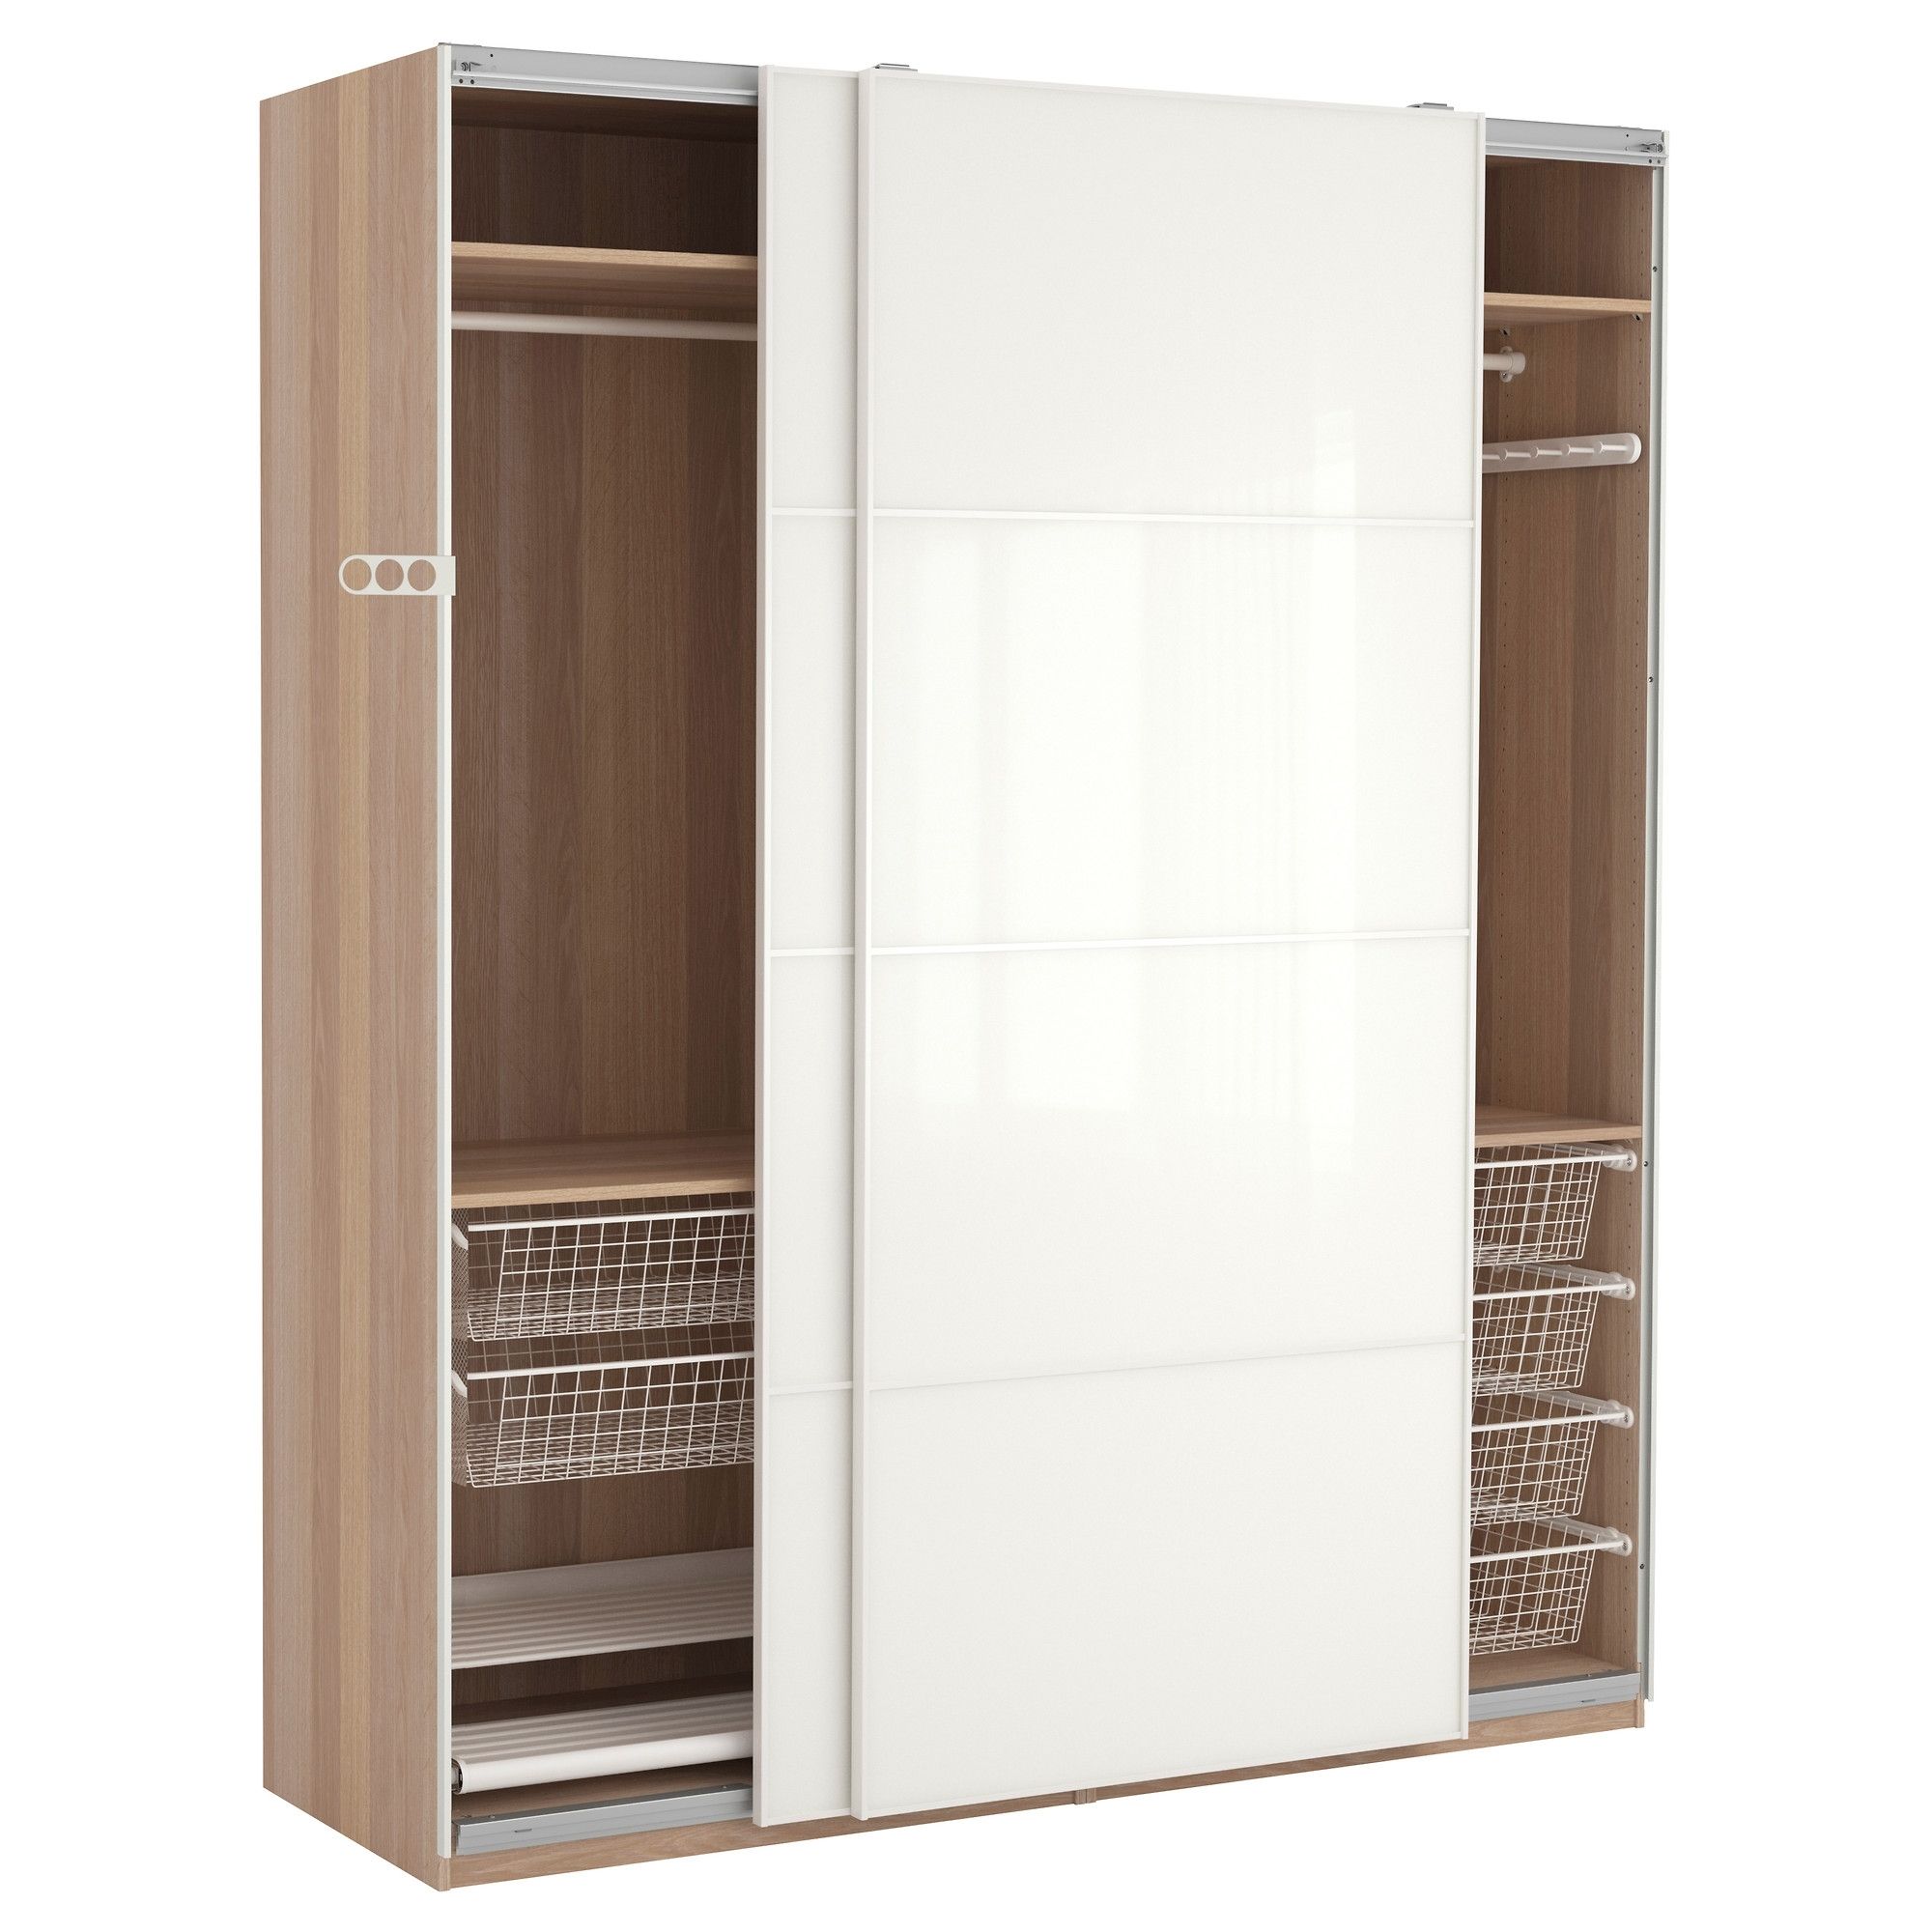 2 Door Wardrobes With Drawers And Shelves For Well Known Furniture : Metal Storage Locker Buy Metal Cabinet 2 Door Storage (View 7 of 15)